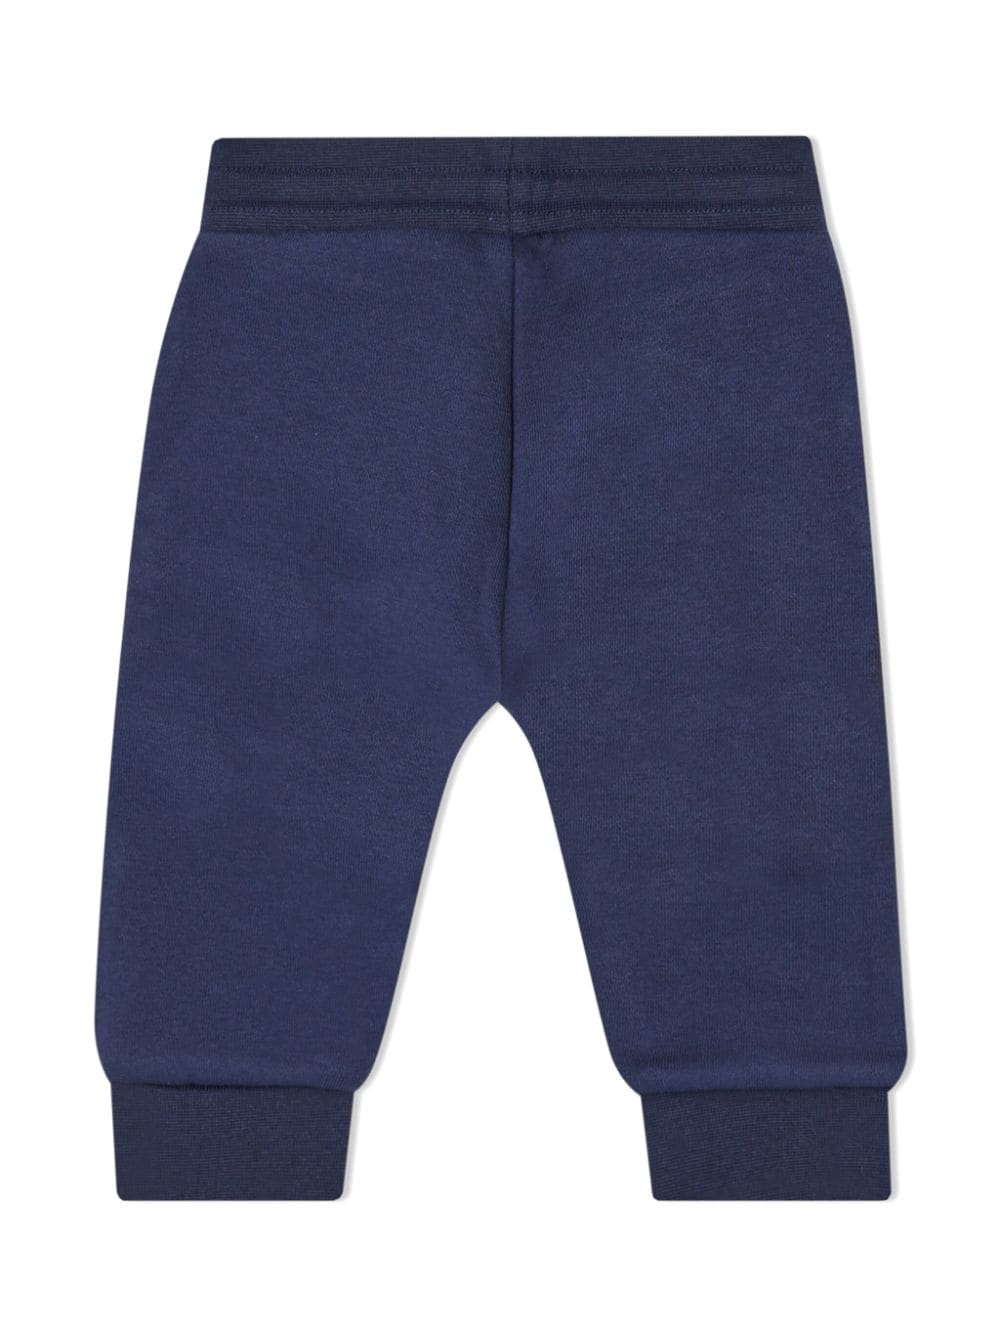 Navy blue cotton boy HUGO BOSS track pants